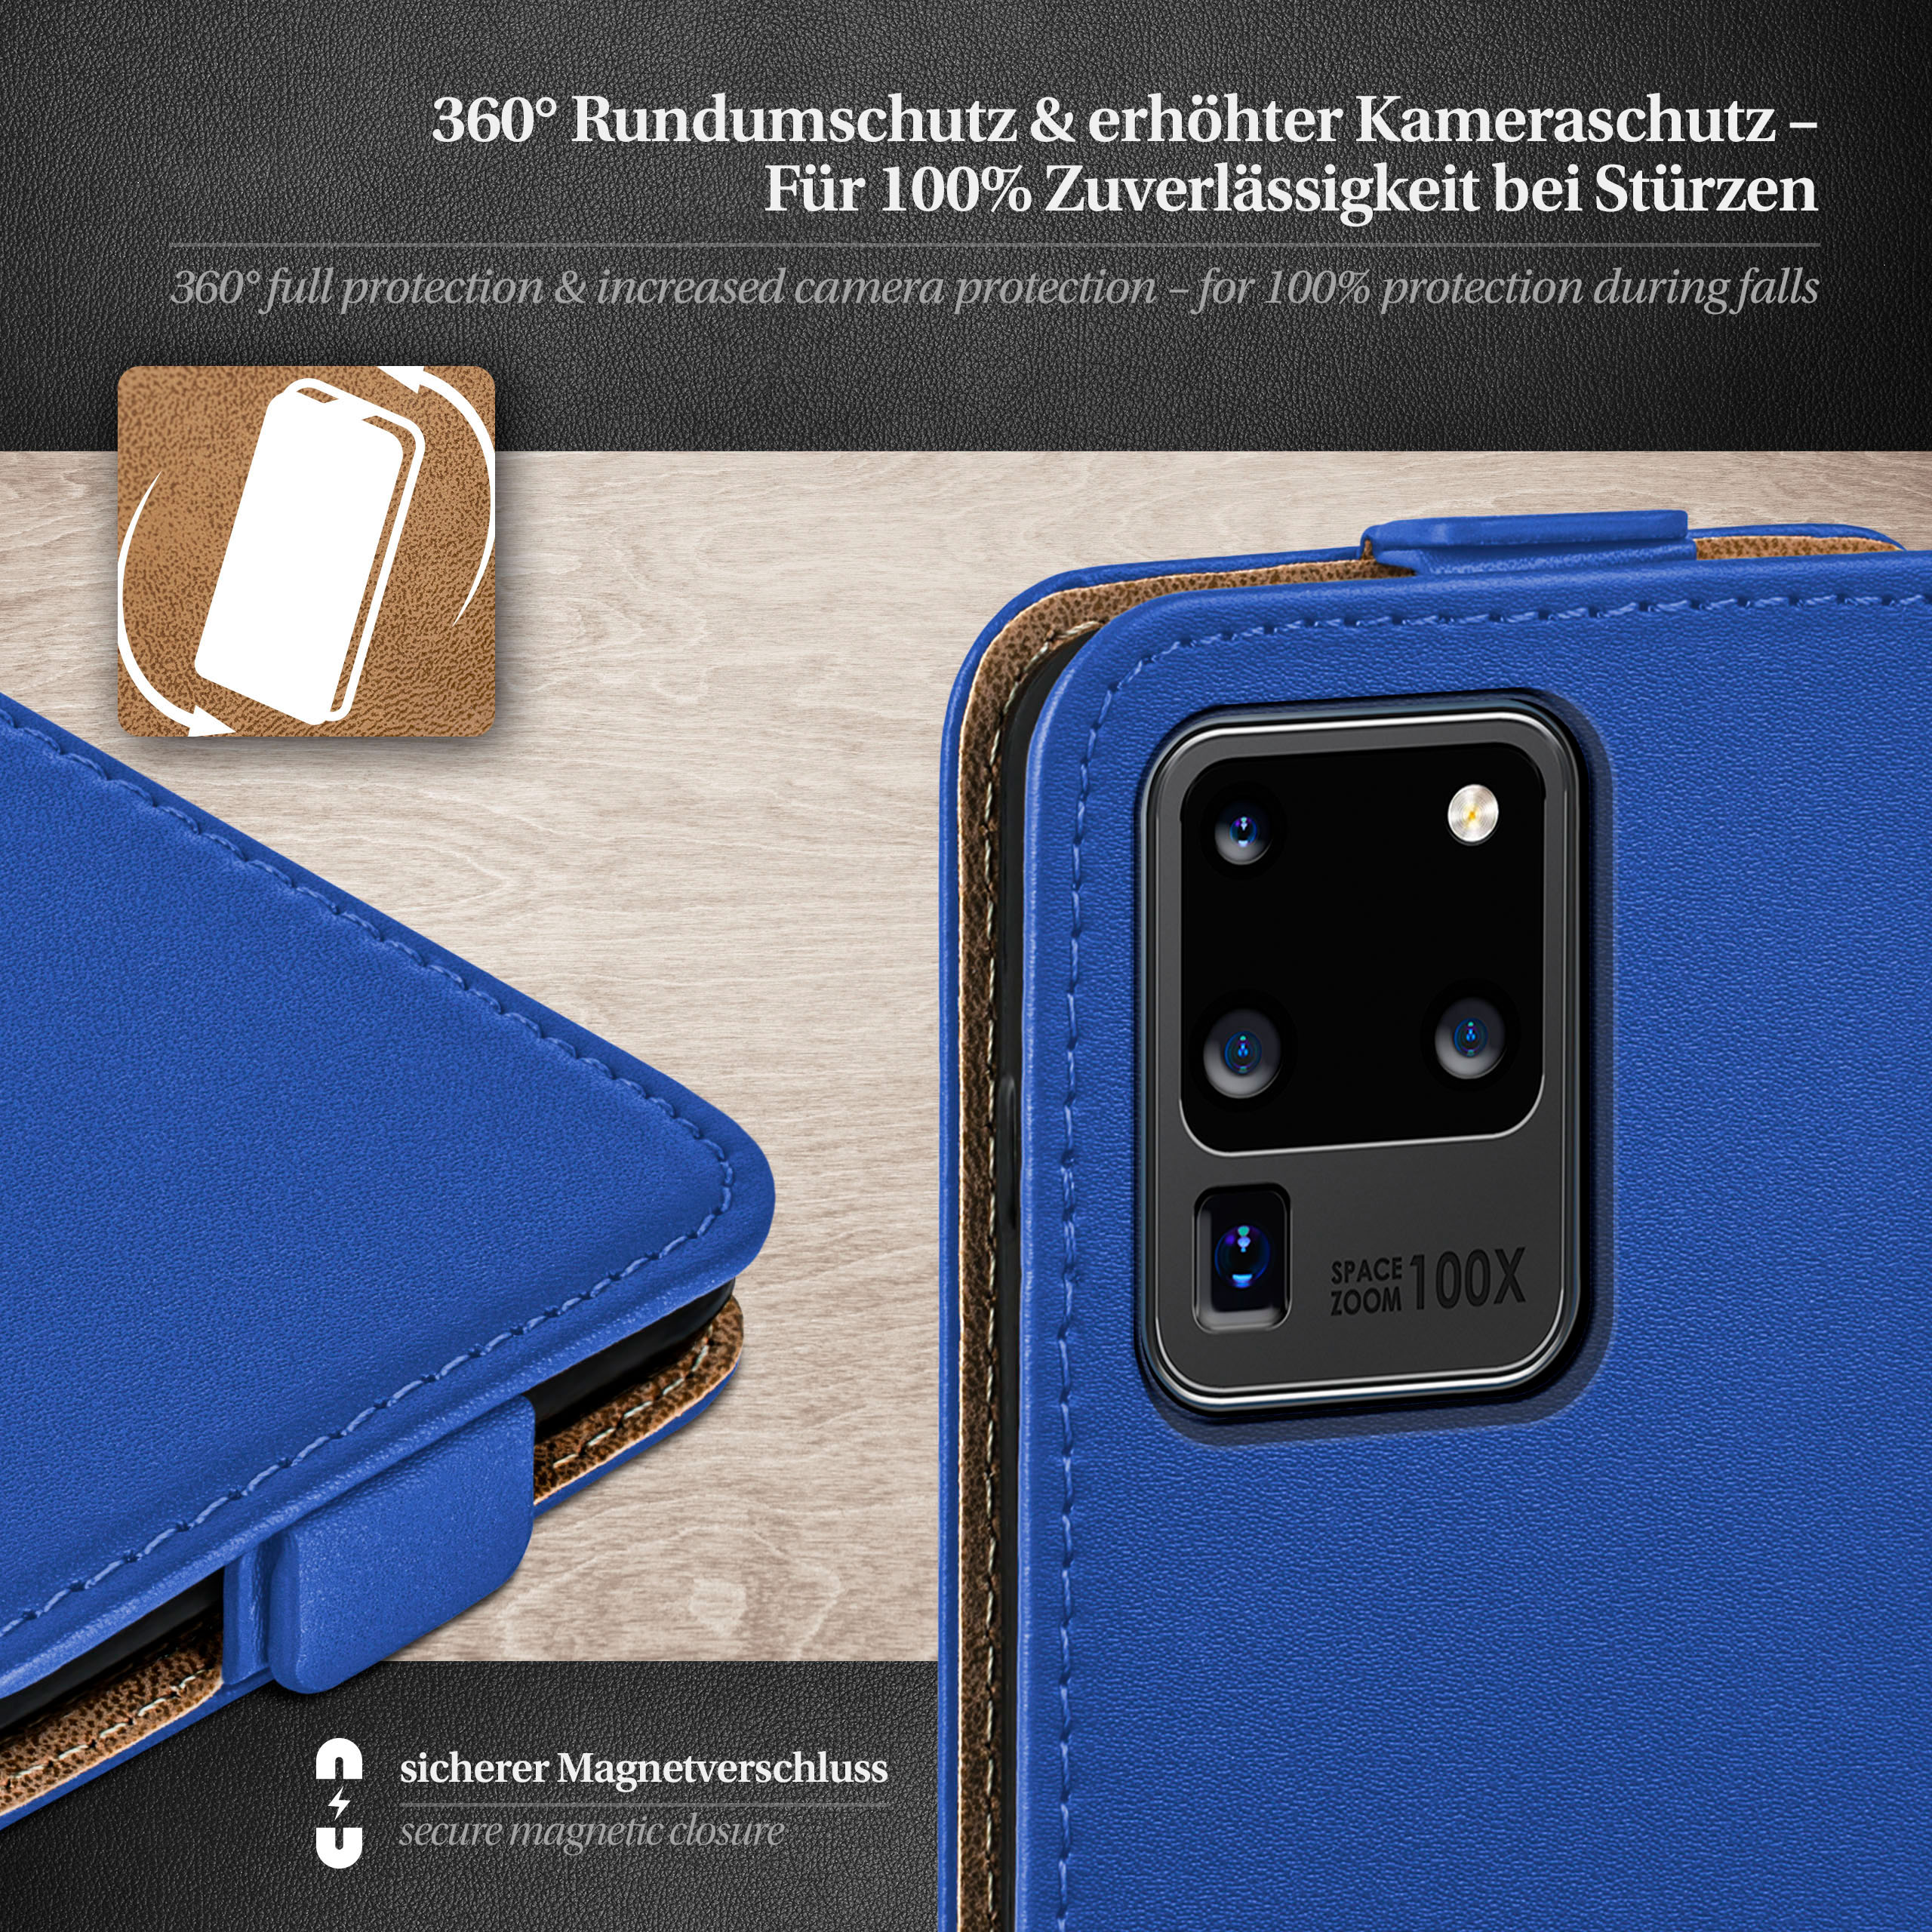 Flip Royal-Blue 5G, Flip Galaxy Cover, S20 Samsung, MOEX / Case, Ultra